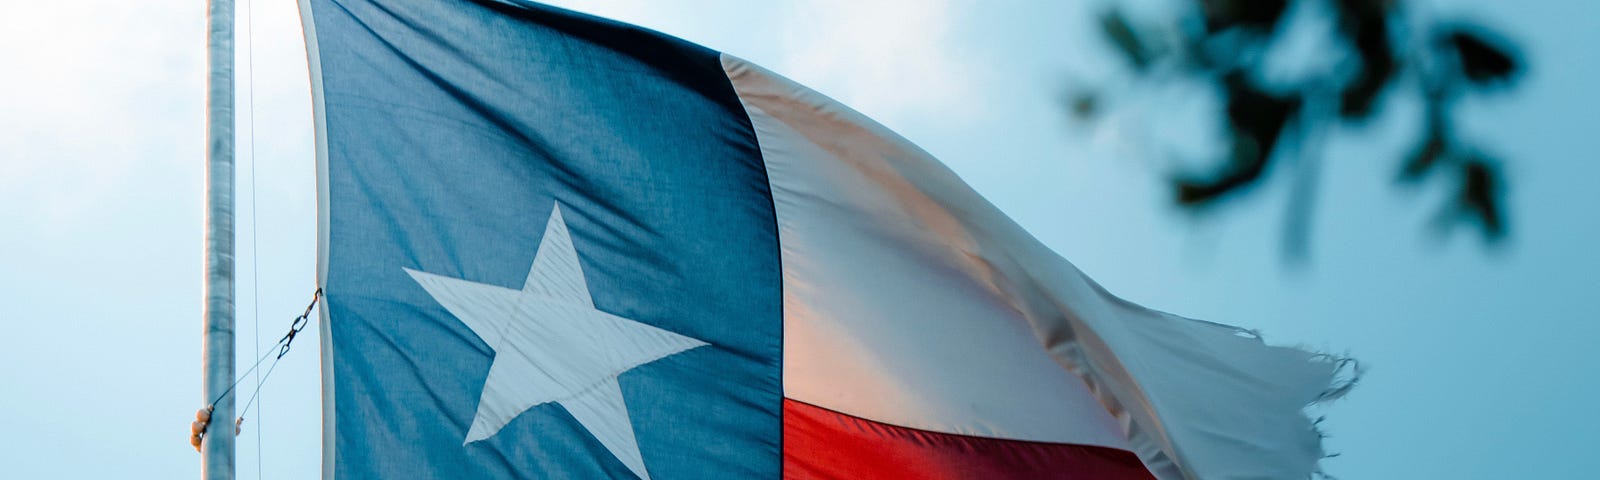 Ragged Texas State Flag